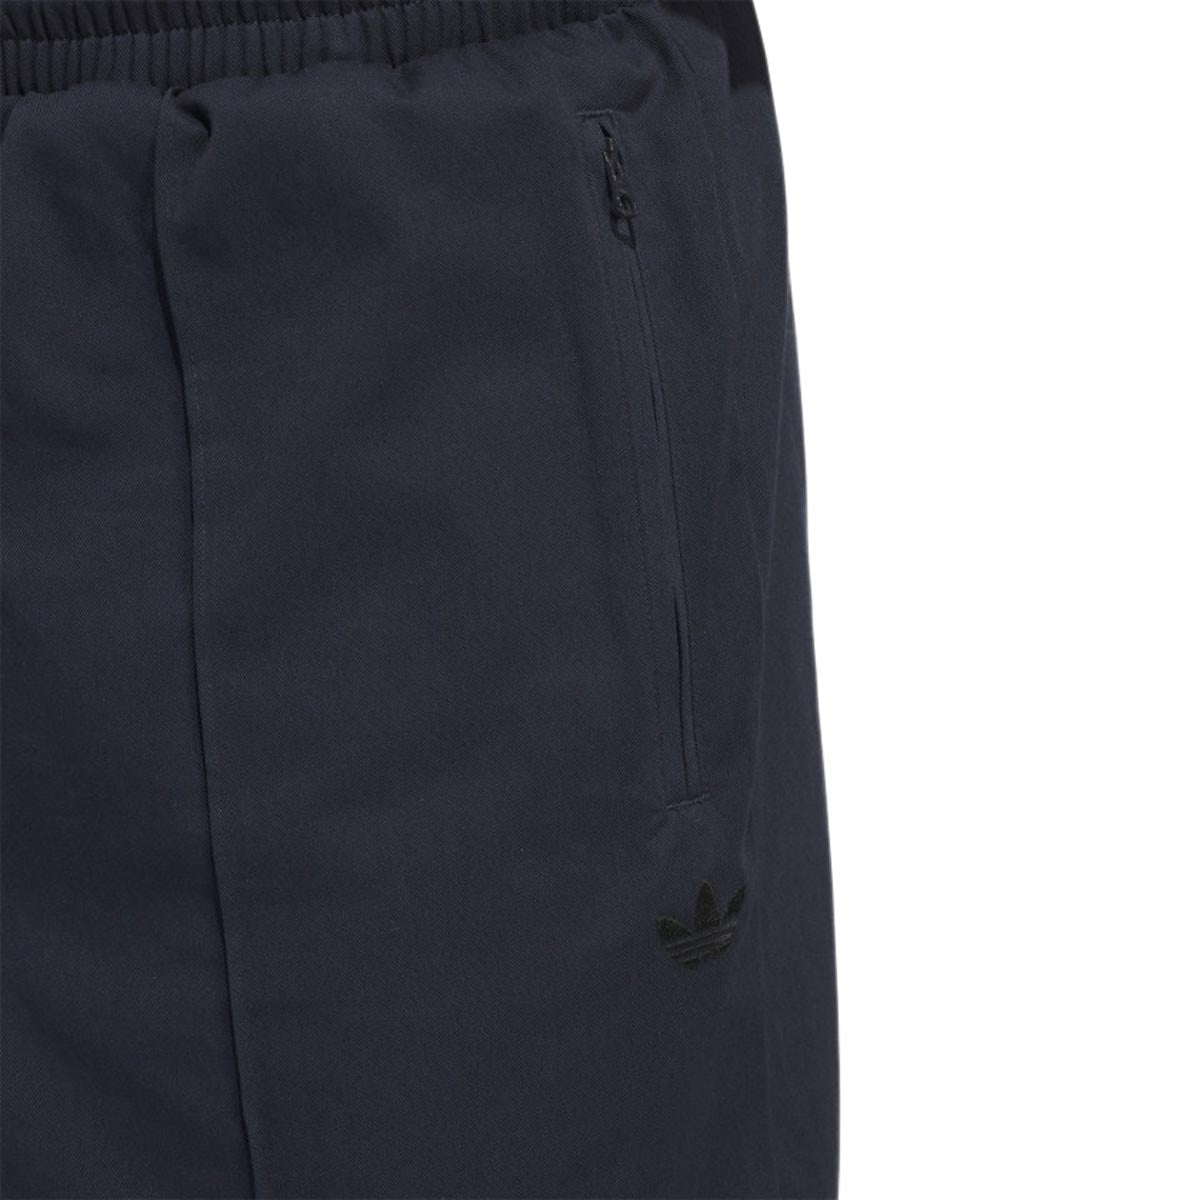 Adidas Pintuck Pants - Legend Ink/Black image 4